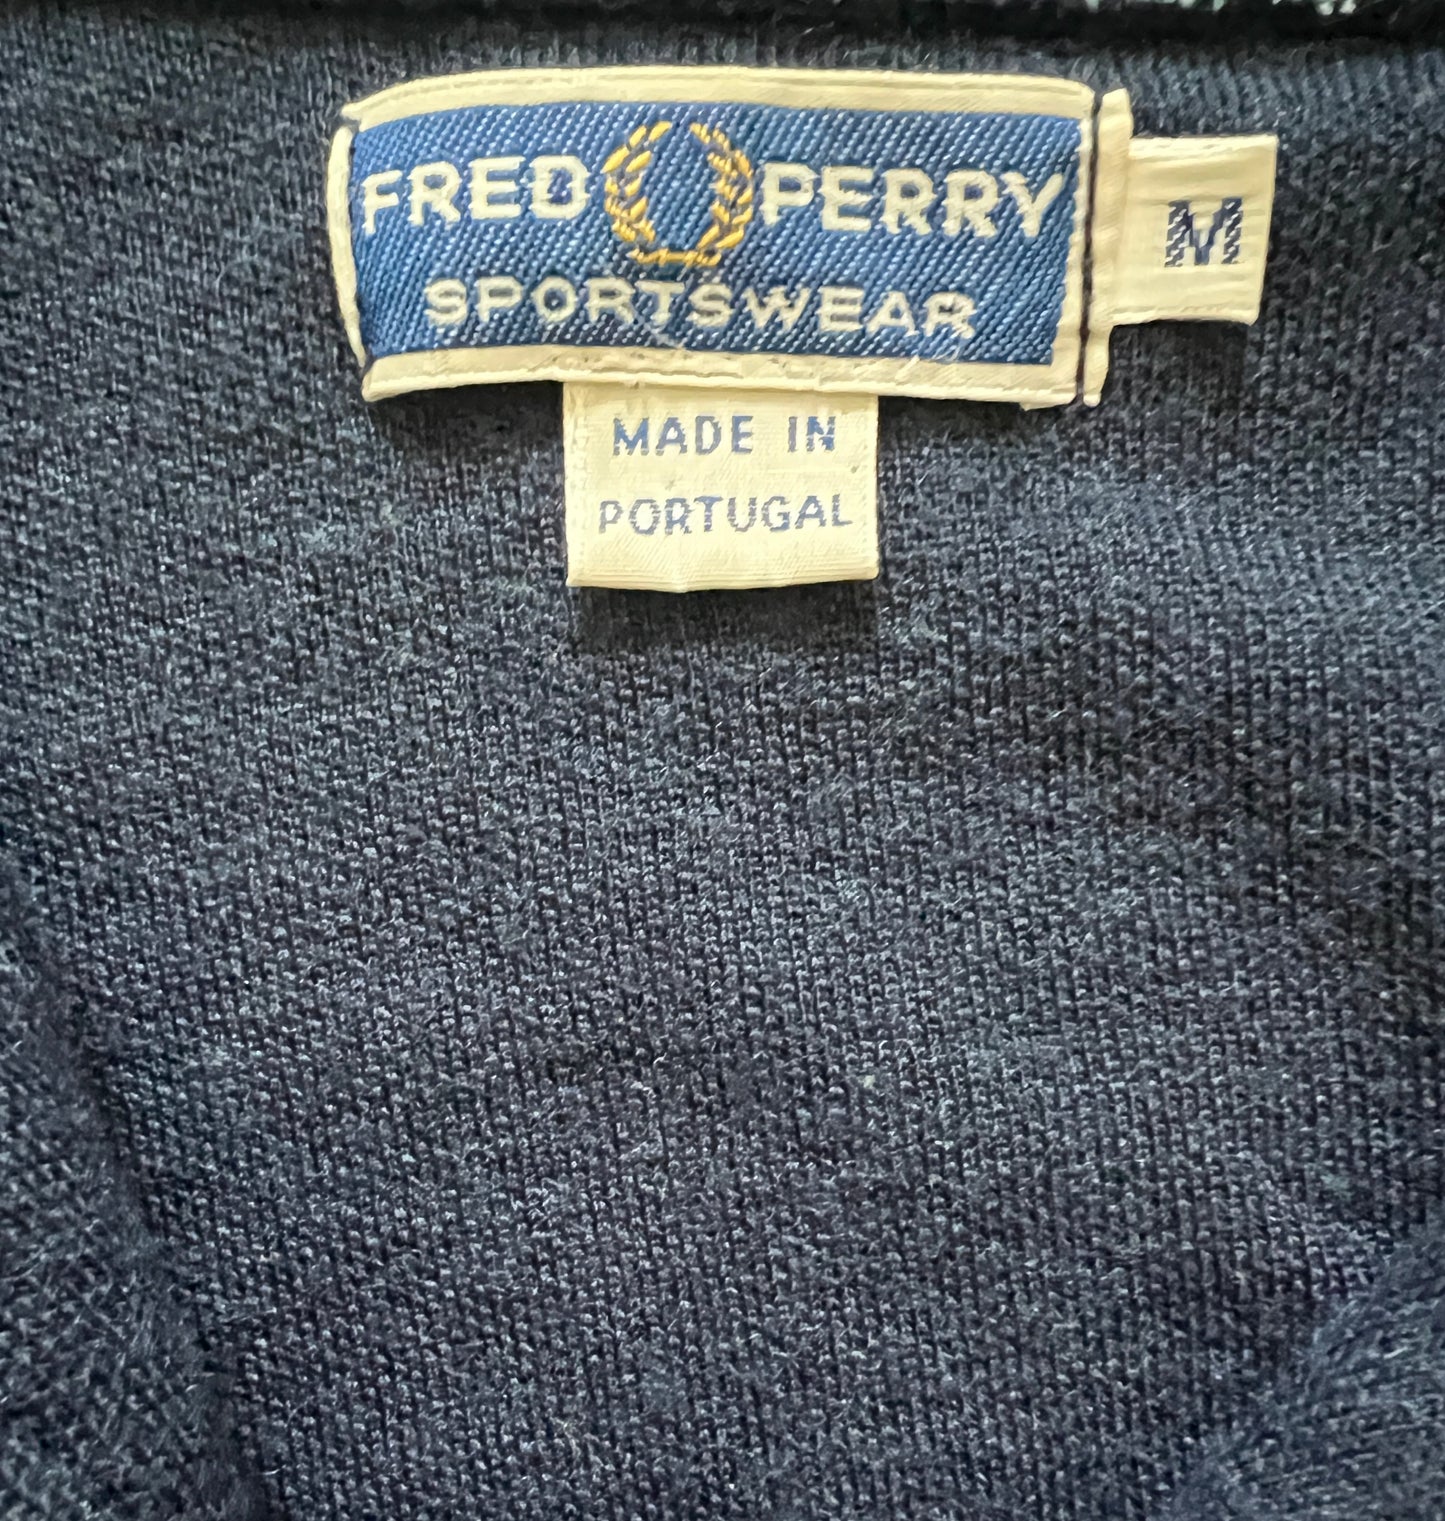 Vintage Fred Perry Full Zip Tennis Jacket (circa 1990s)